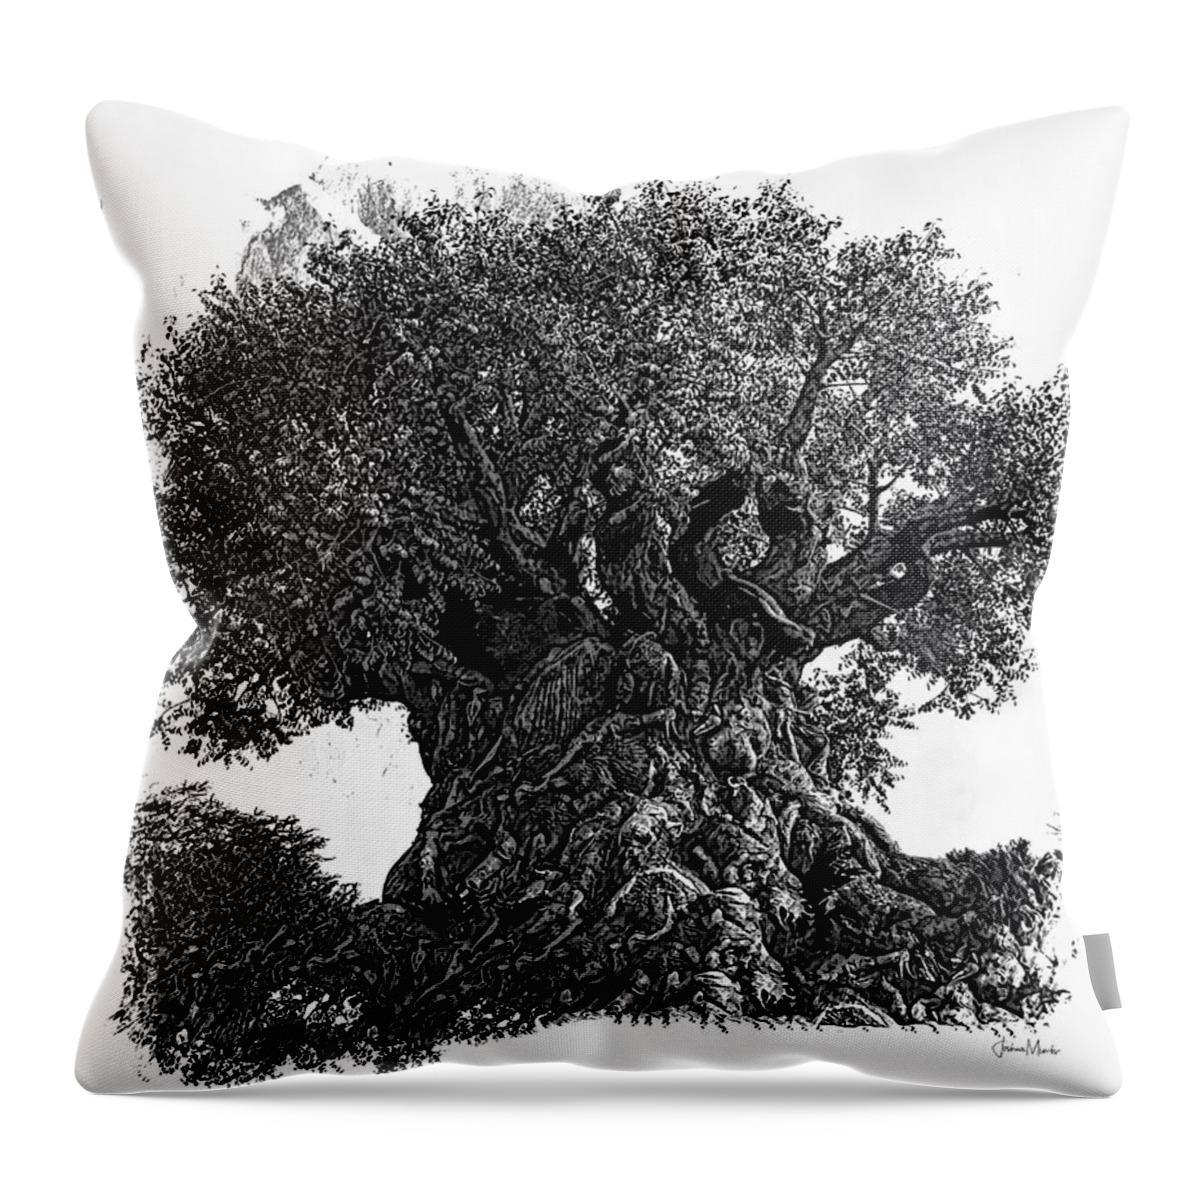 Joshua Mimbs Throw Pillow featuring the photograph Tree of Life #1 by FineArtRoyal Joshua Mimbs